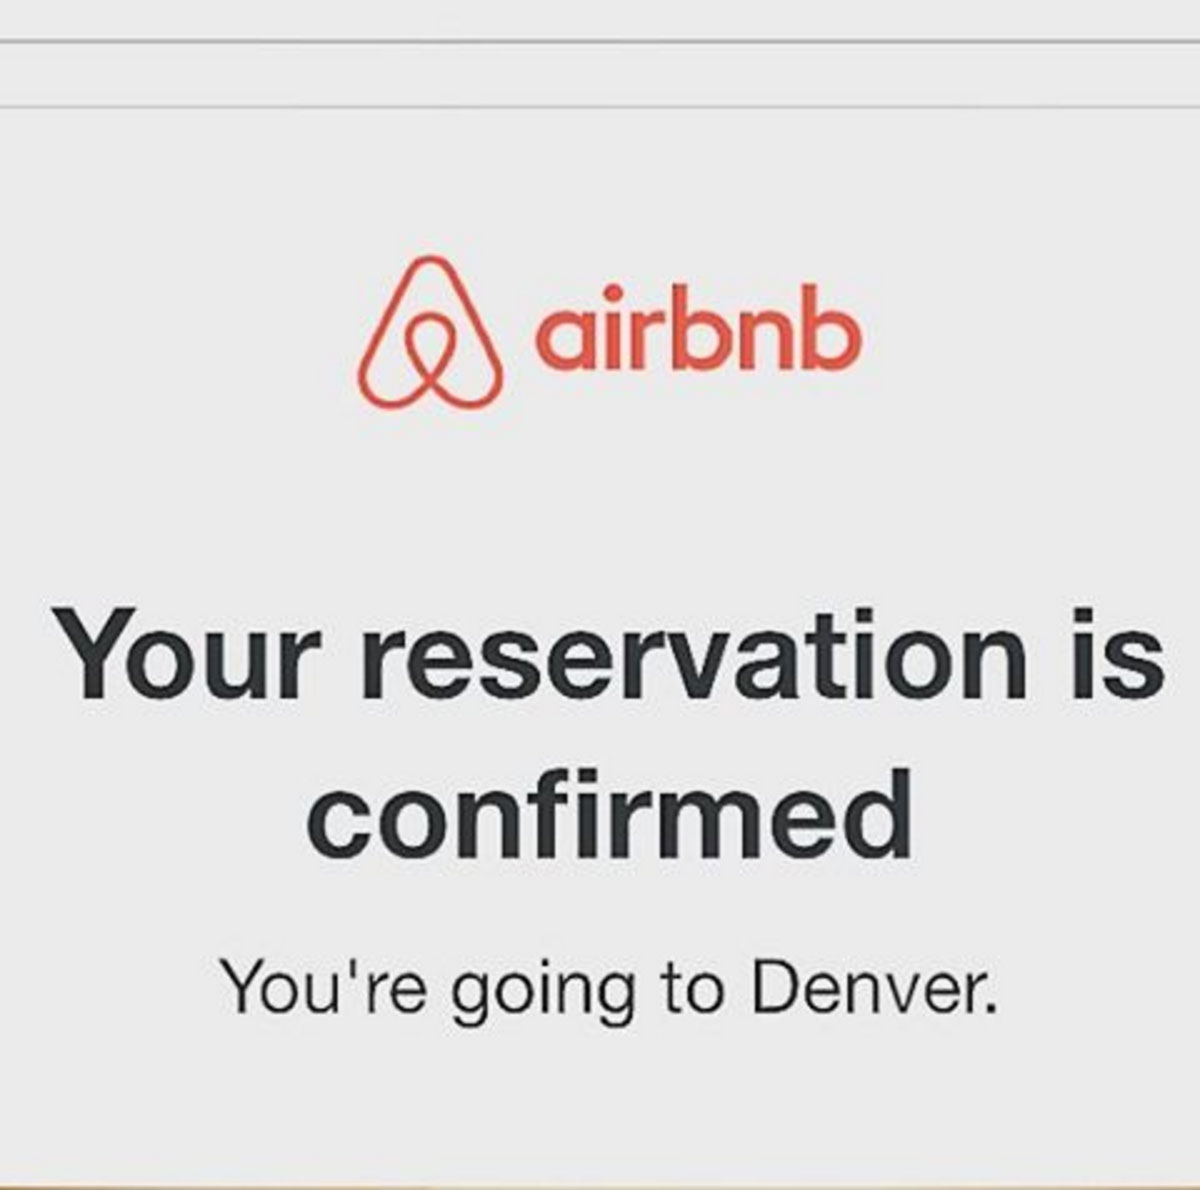 You’re going to Denver